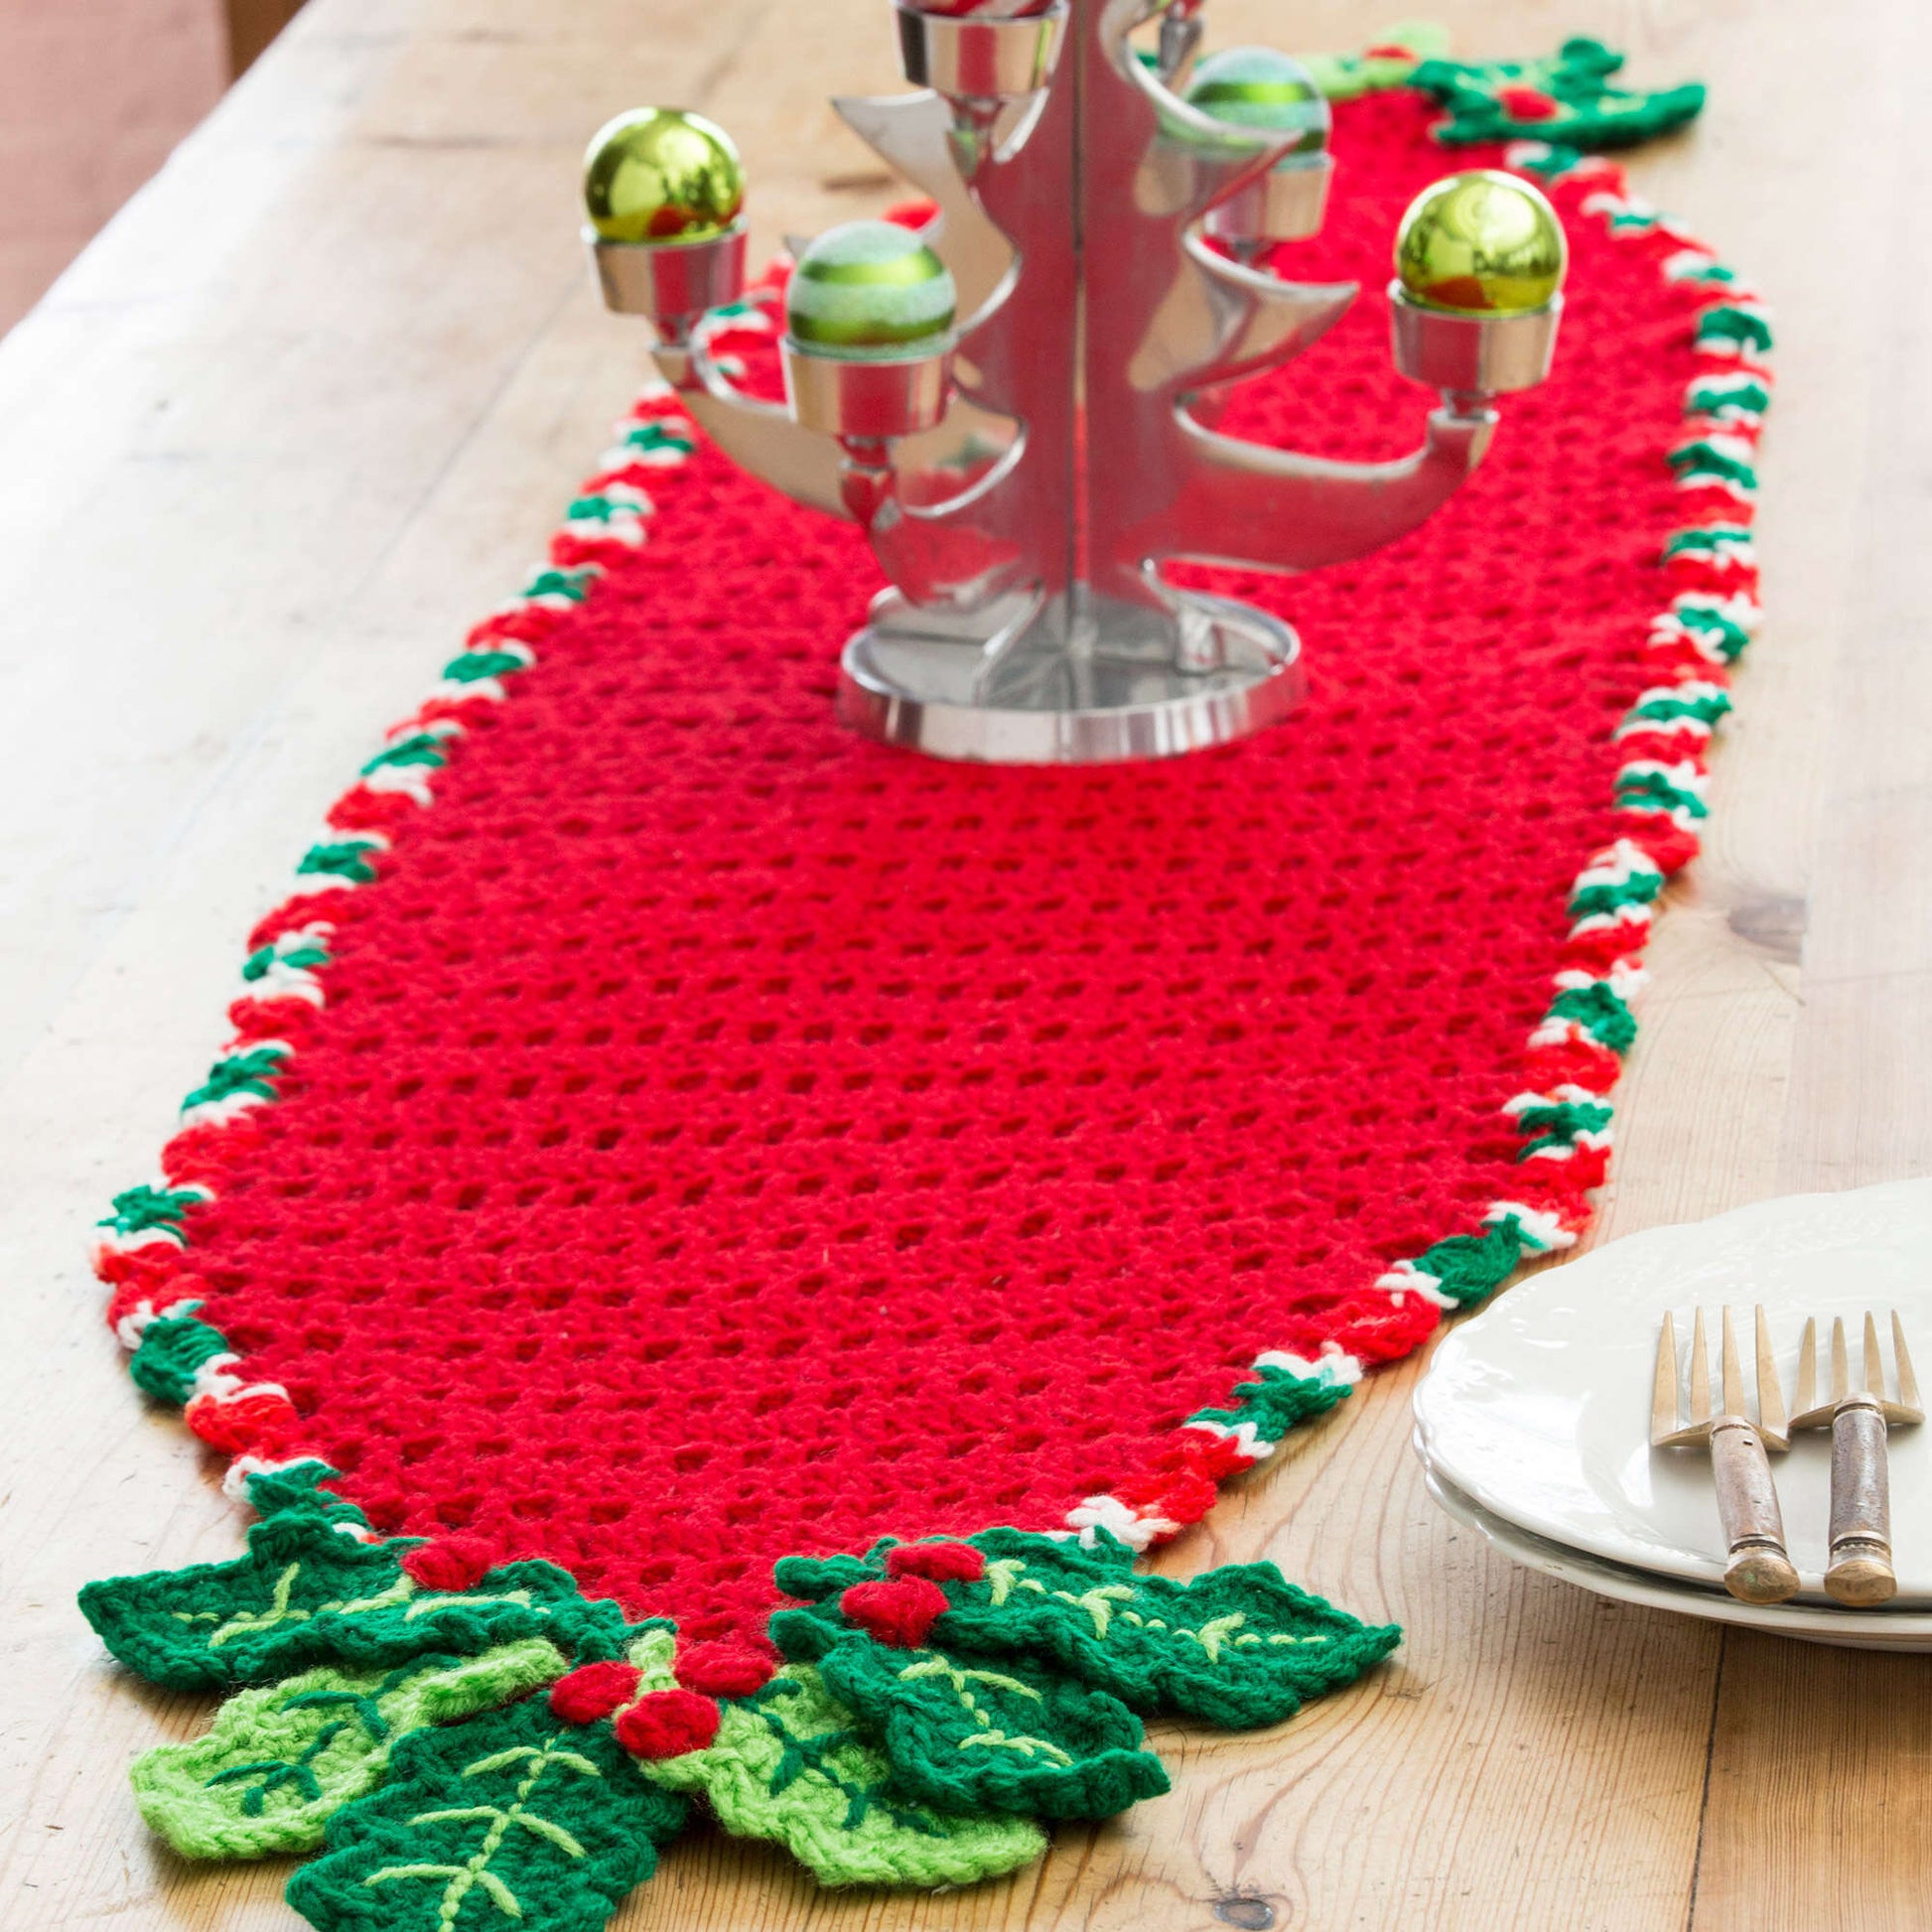 Free Red Heart Holly Trim Table Runner Crochet Pattern